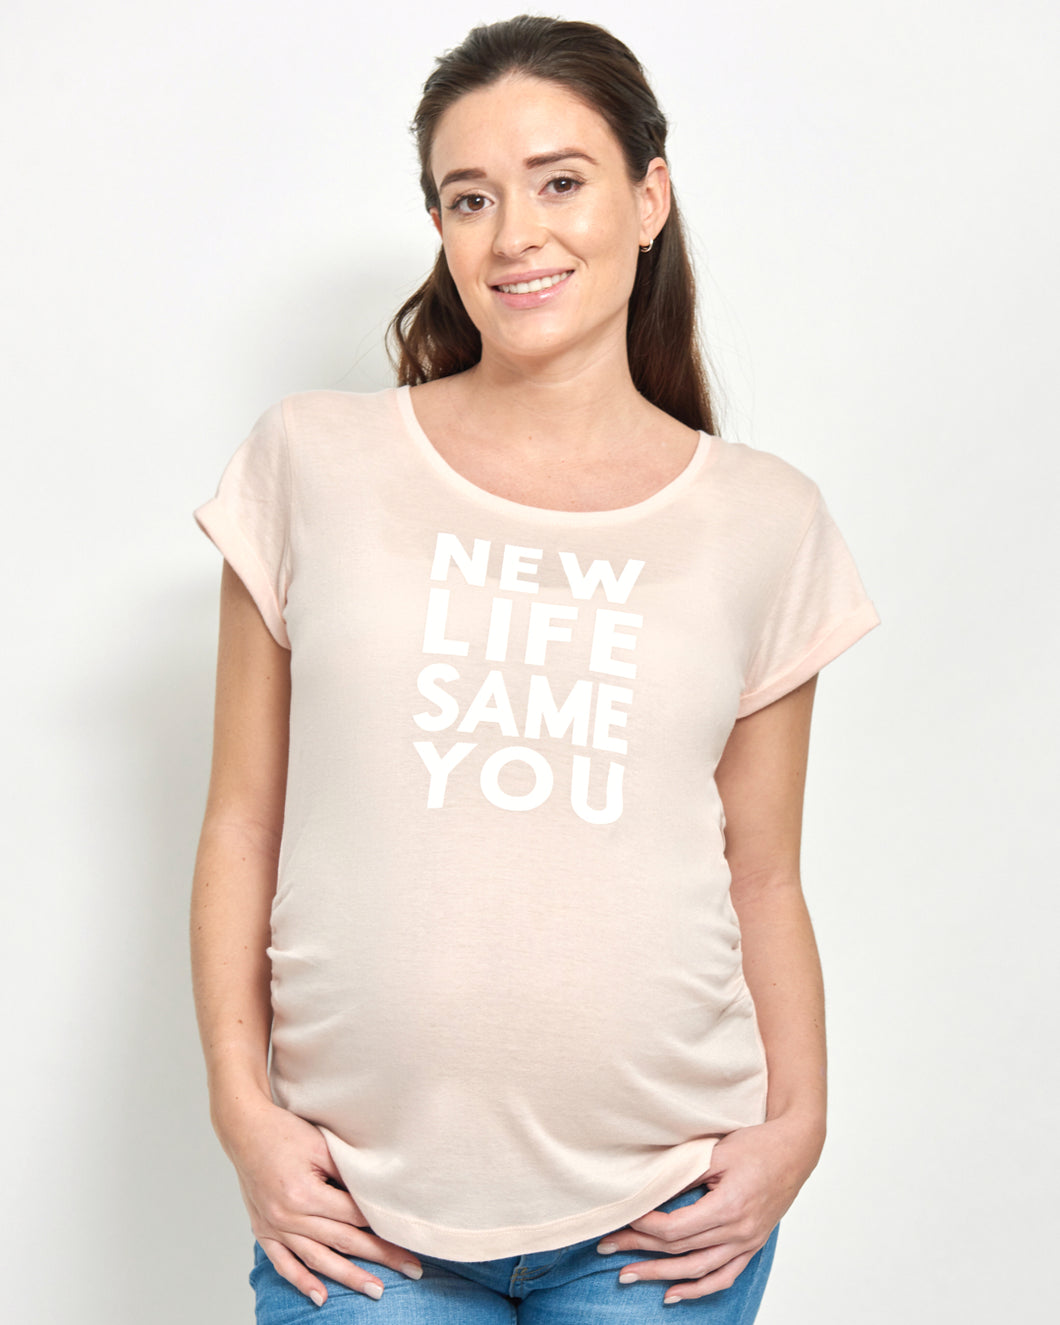 New Life Same You Maternity T-shirt